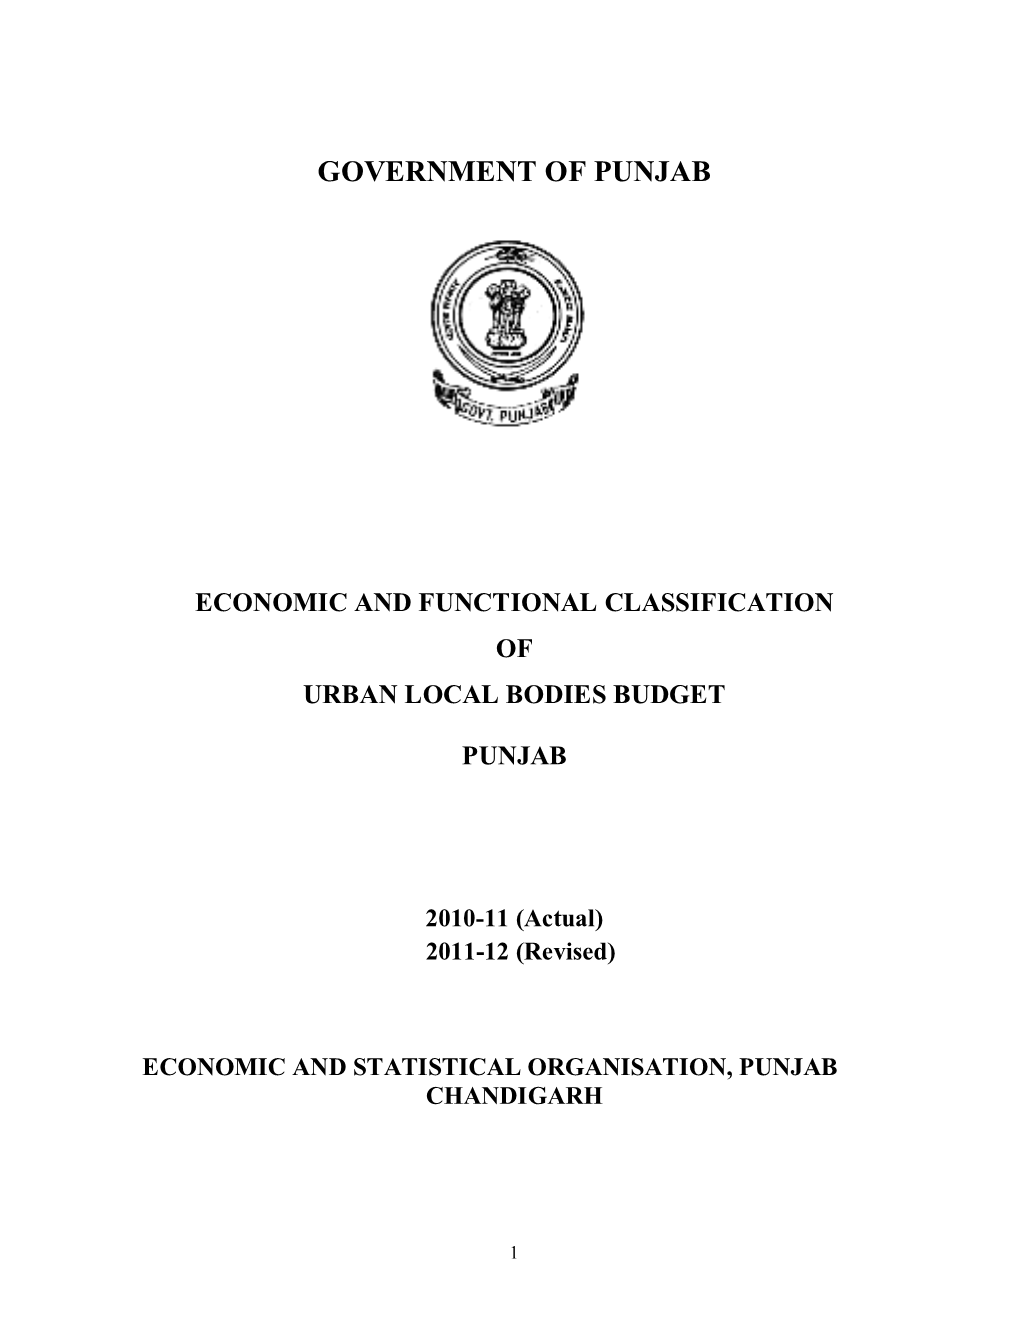 Economic & Functional Classification ULB's-Budget Punjab